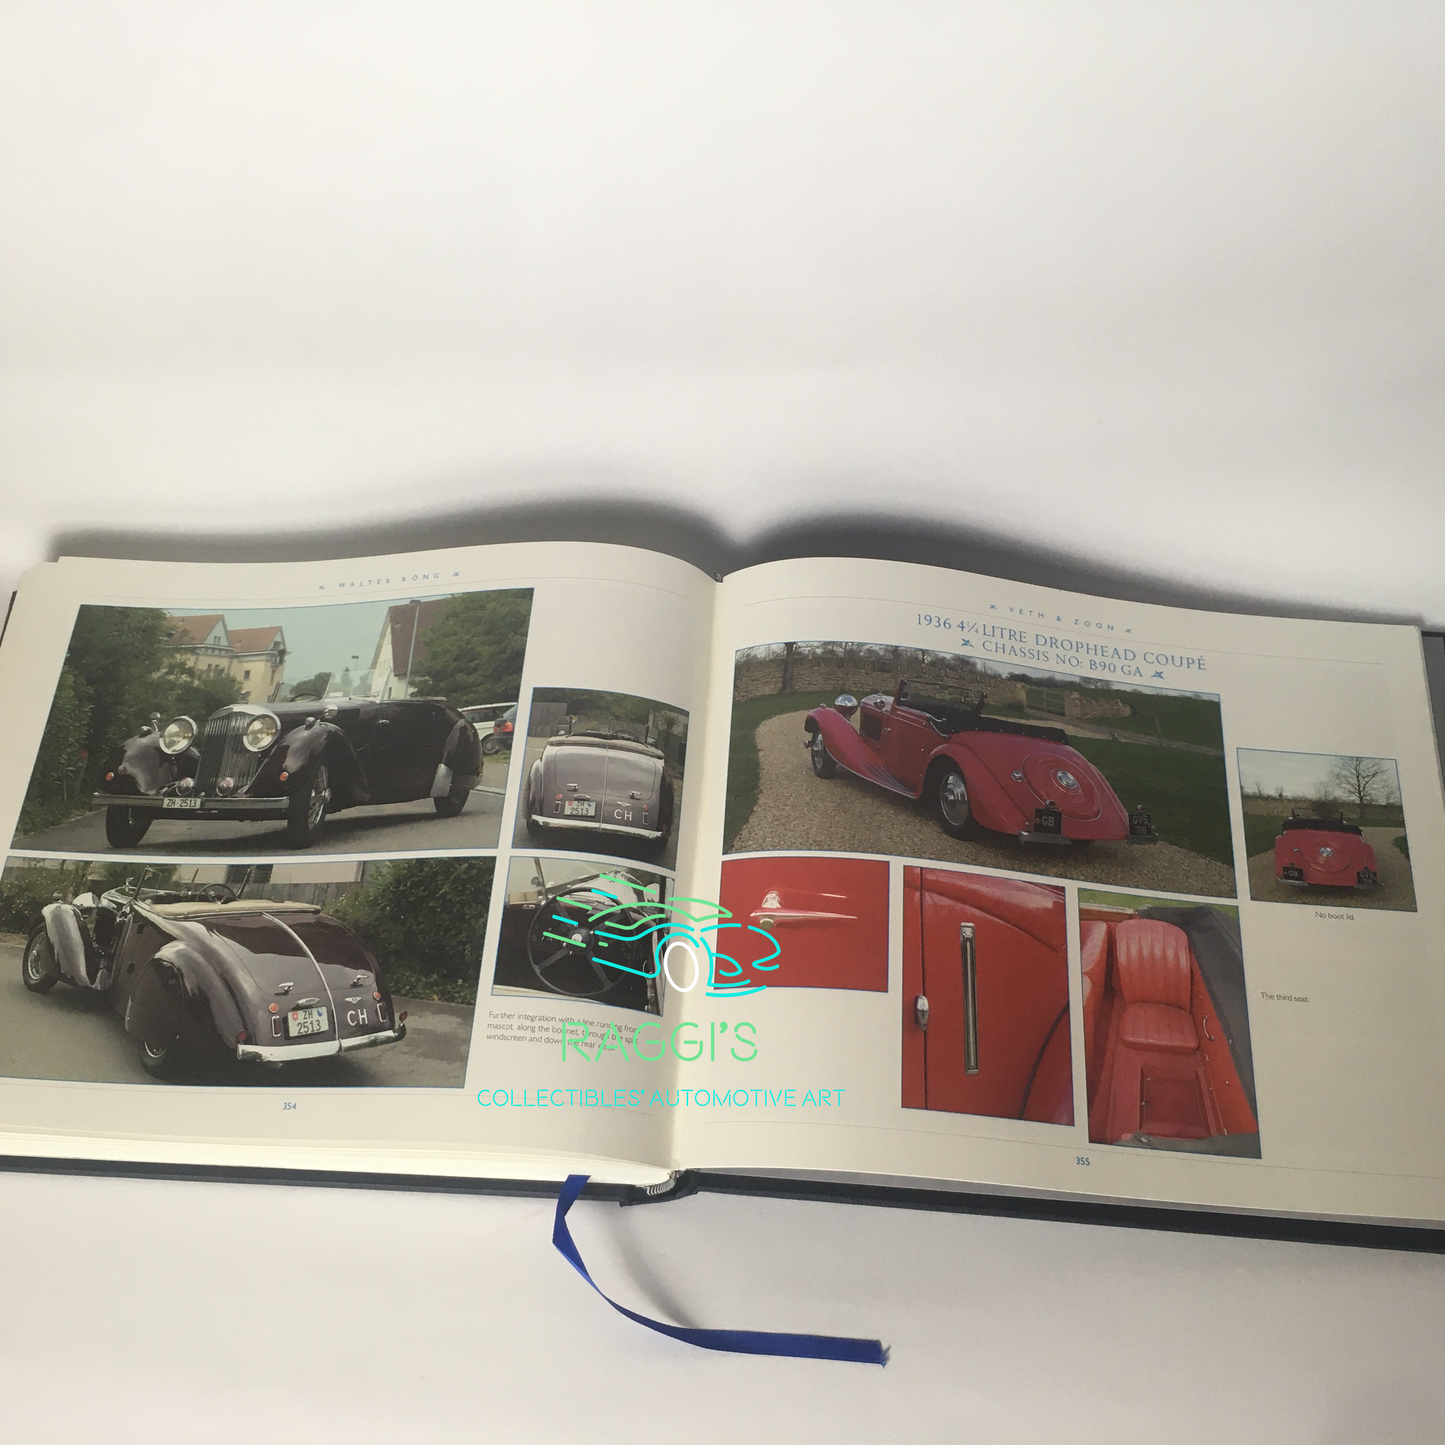 Bentley, Libro Bentley Beauty, Edizione Limitata copia n.470, Neil Fraser, Tomas Knapek, ISBN 095474621X - Raggi's Collectibles' Automotive Art